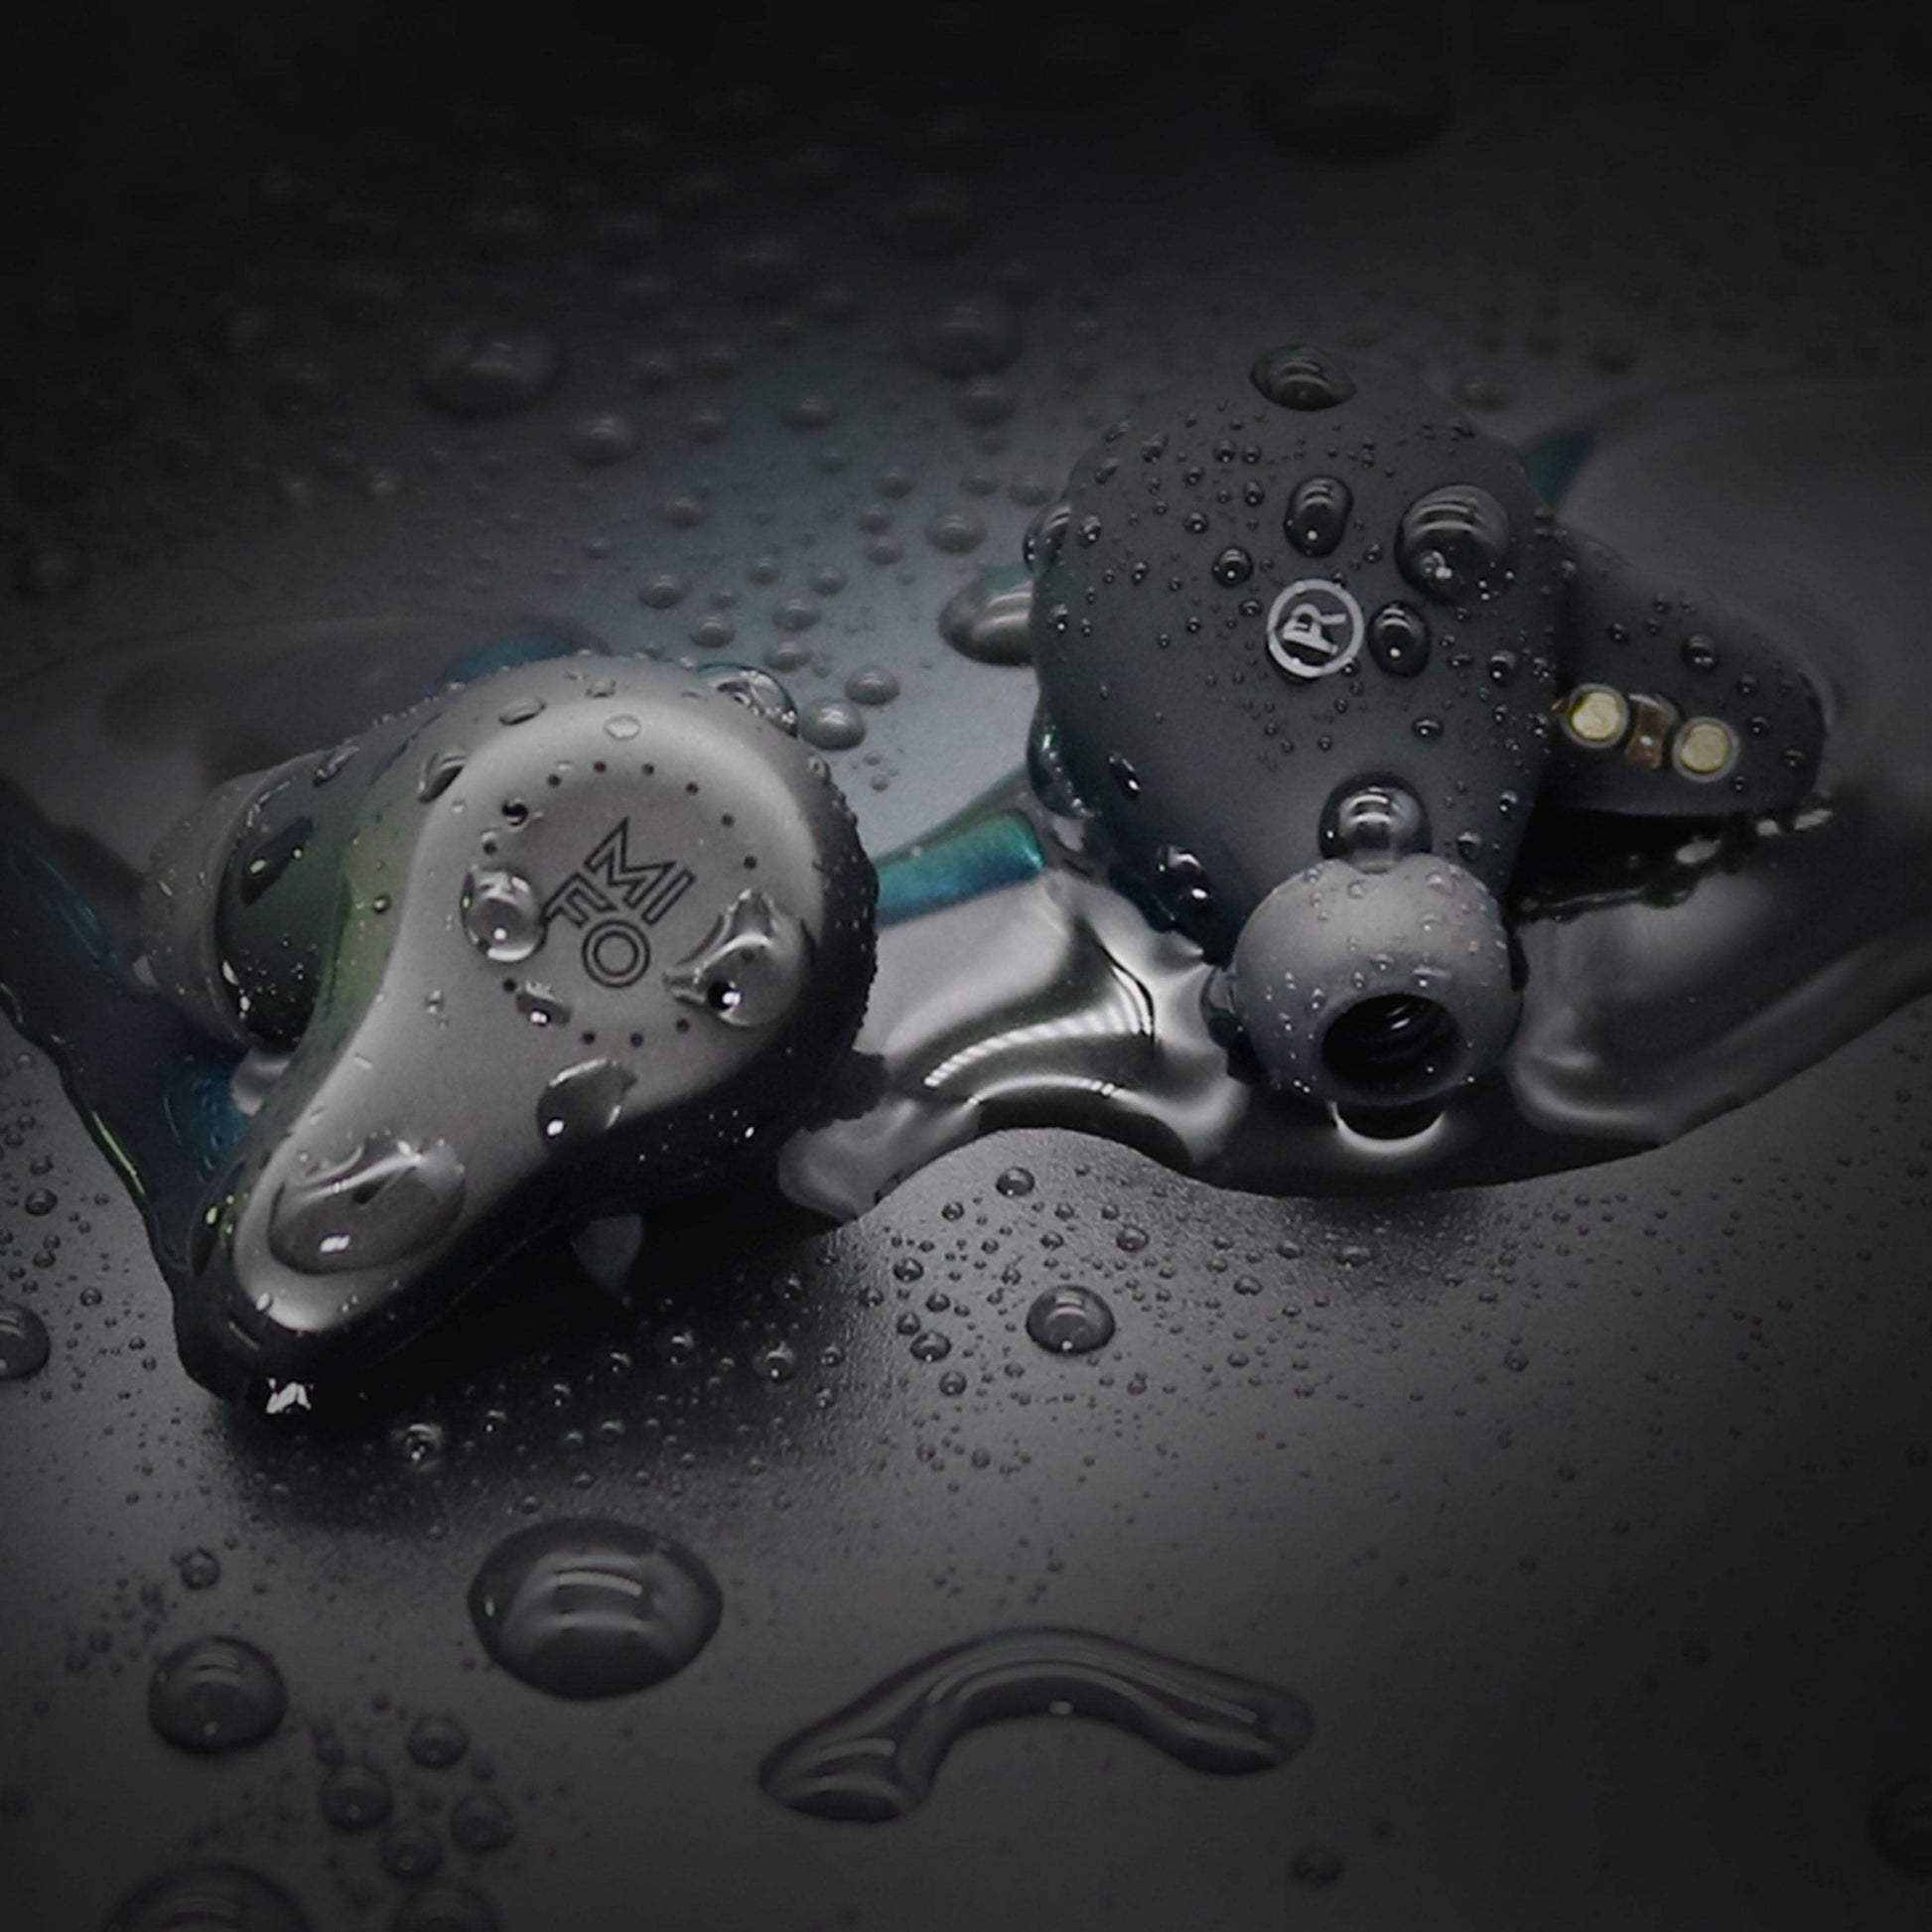 Mifo O7 Waterproof Earbuds